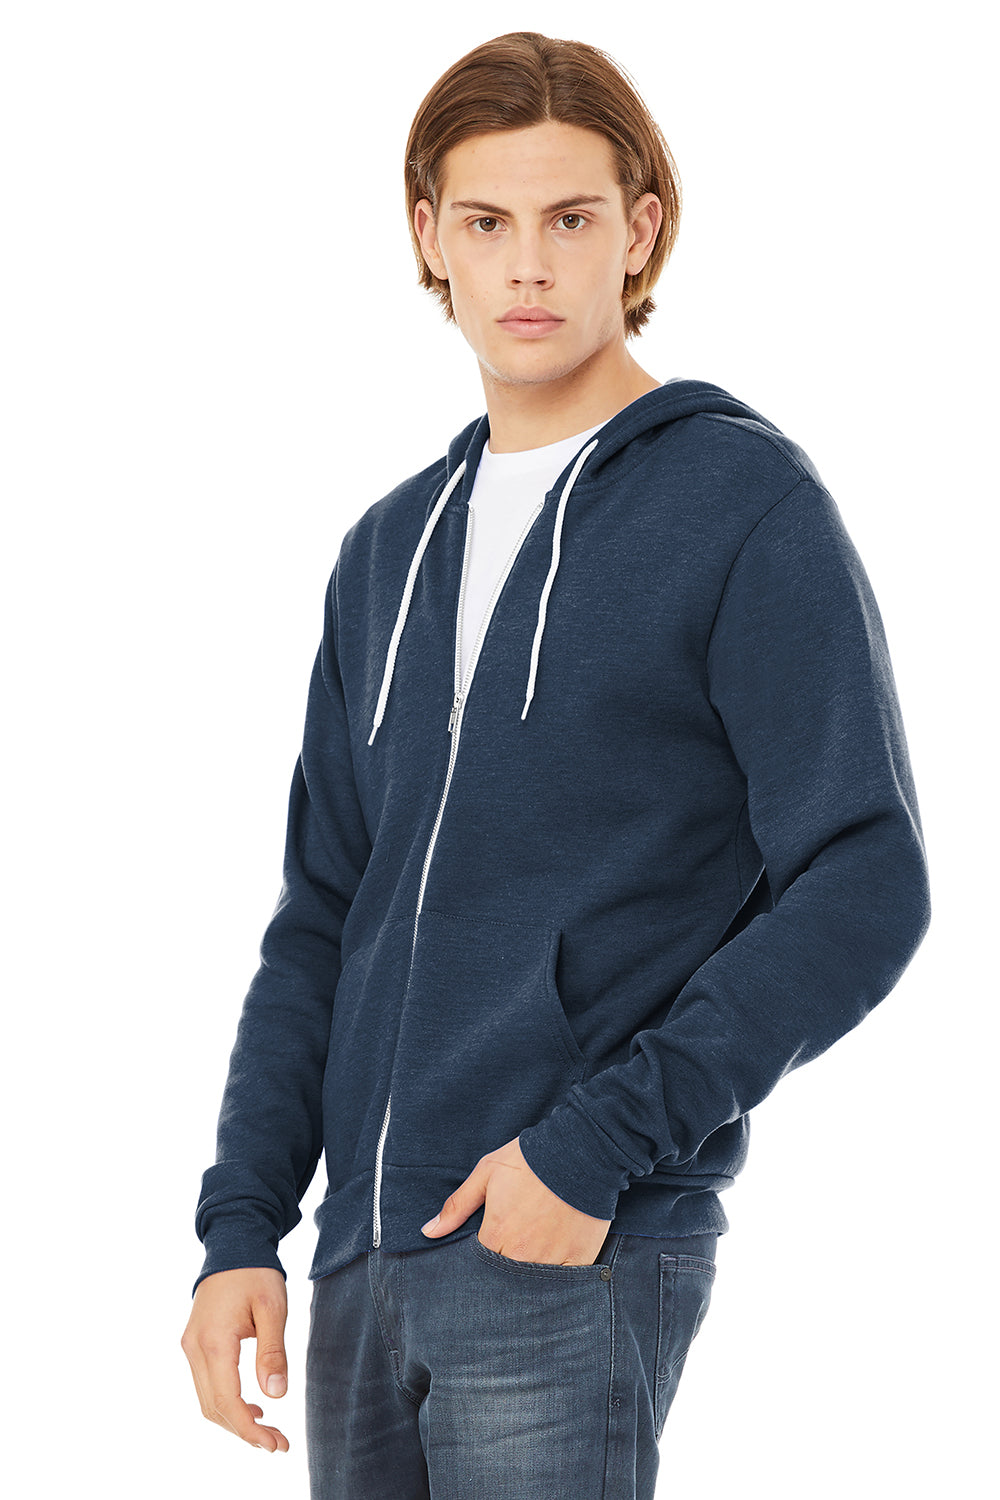 Bella + Canvas BC3739/3739 Mens Fleece Full Zip Hooded Sweatshirt Hoodie Heather Navy Blue Model 3Q